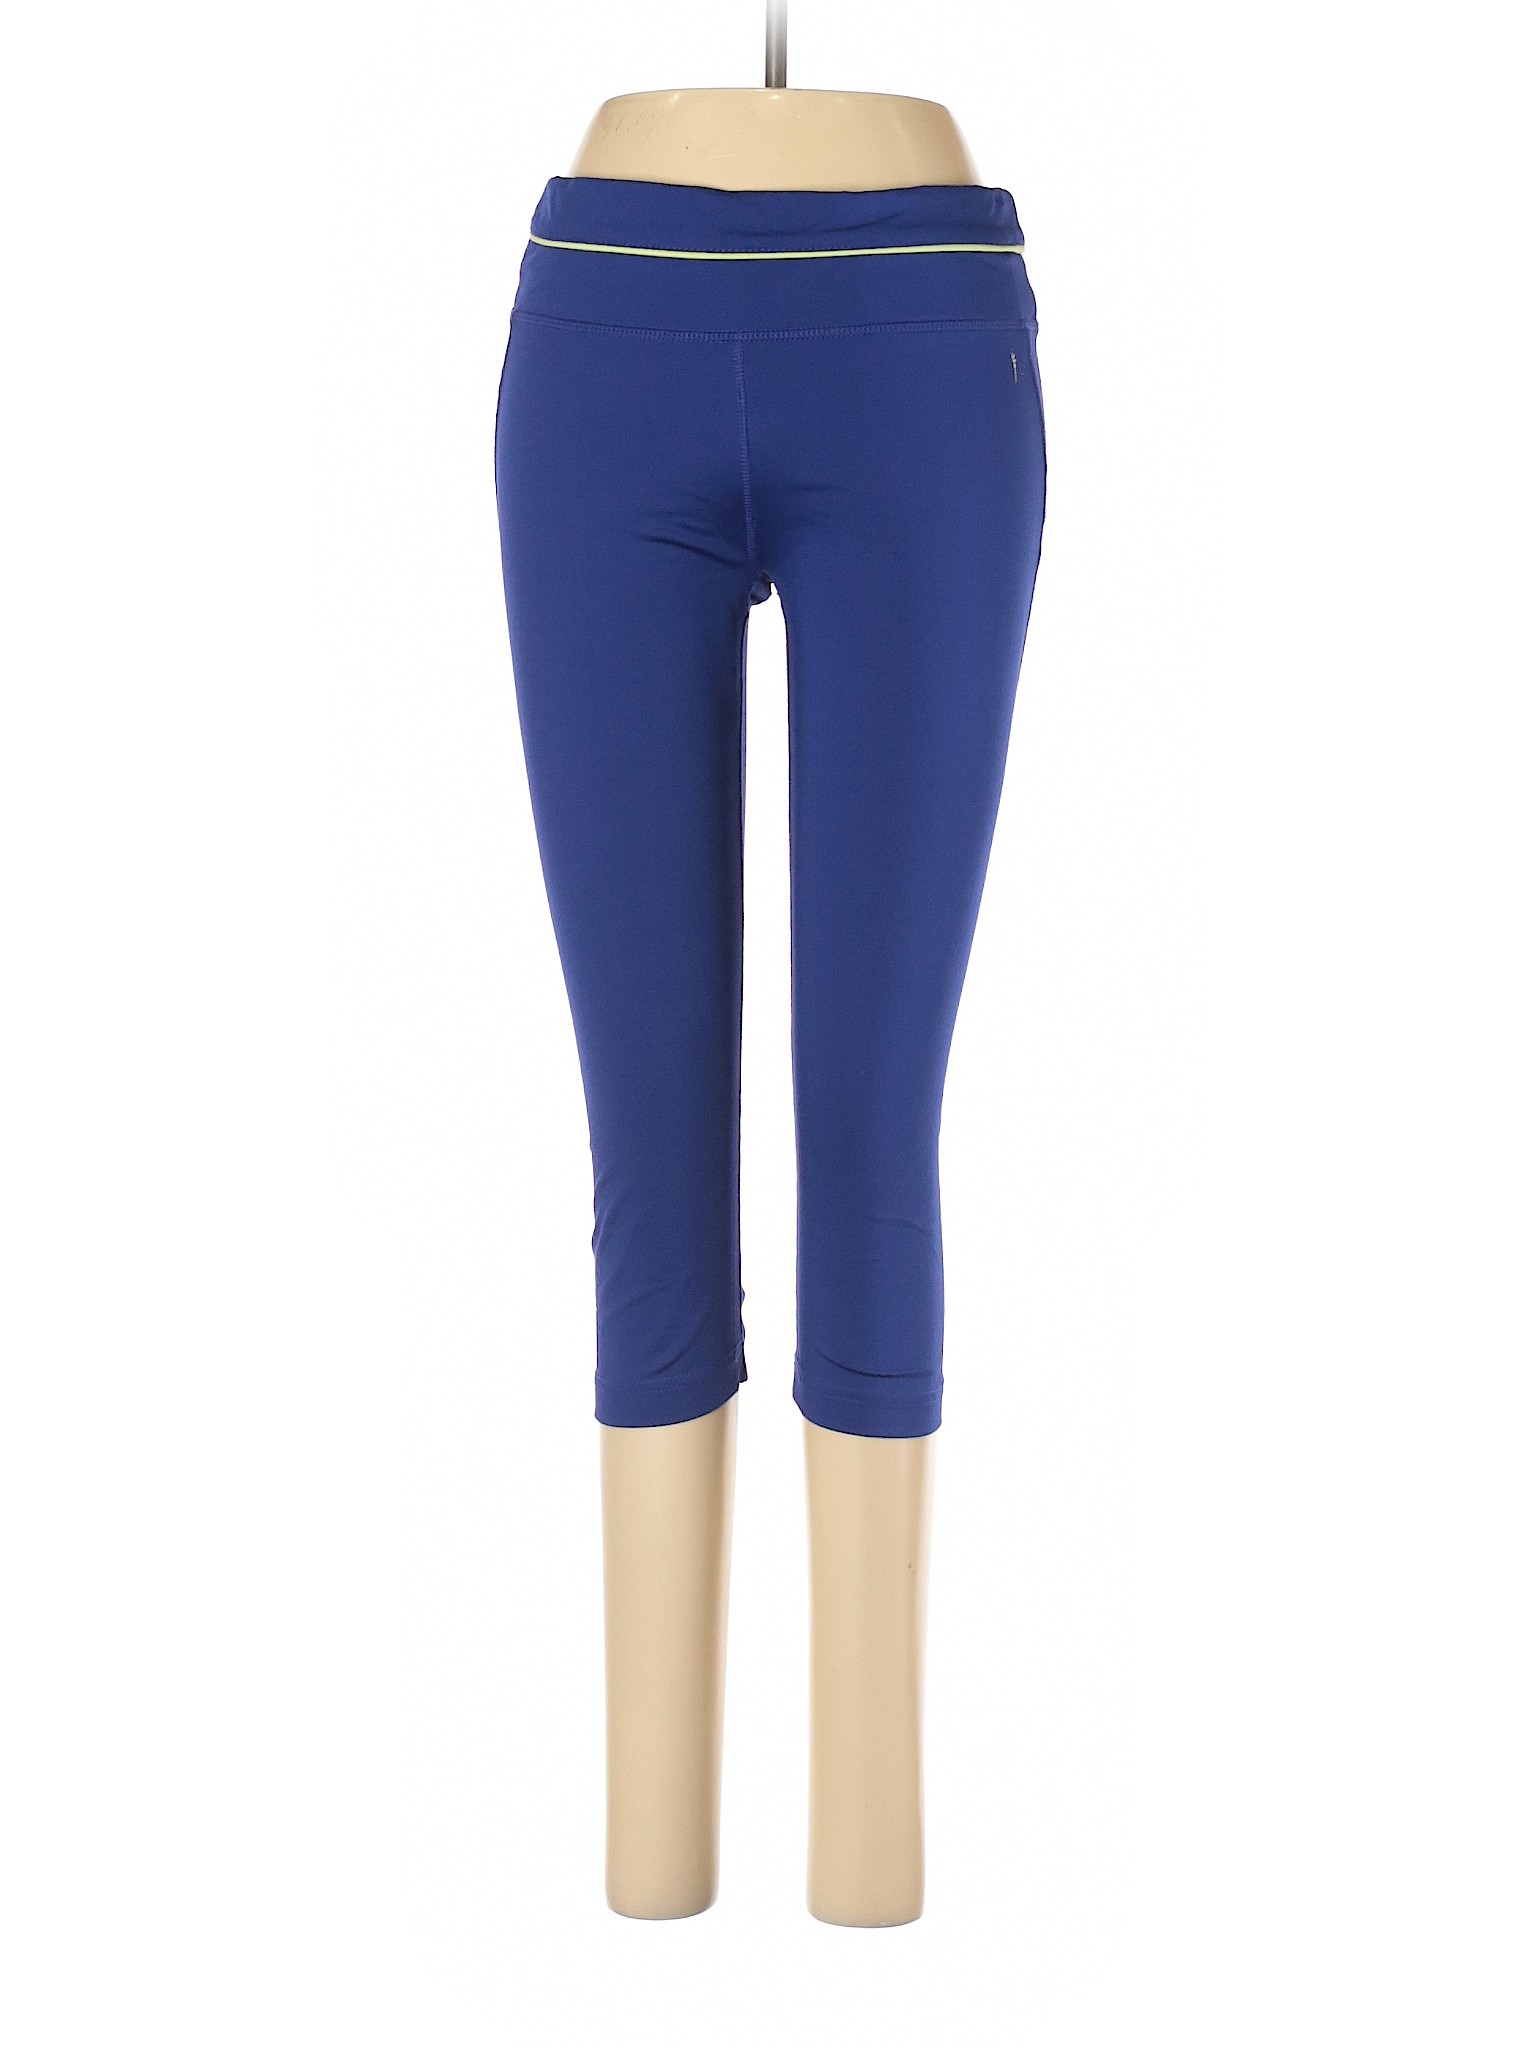 Danskin Now Women Blue Active Pants 8 | eBay